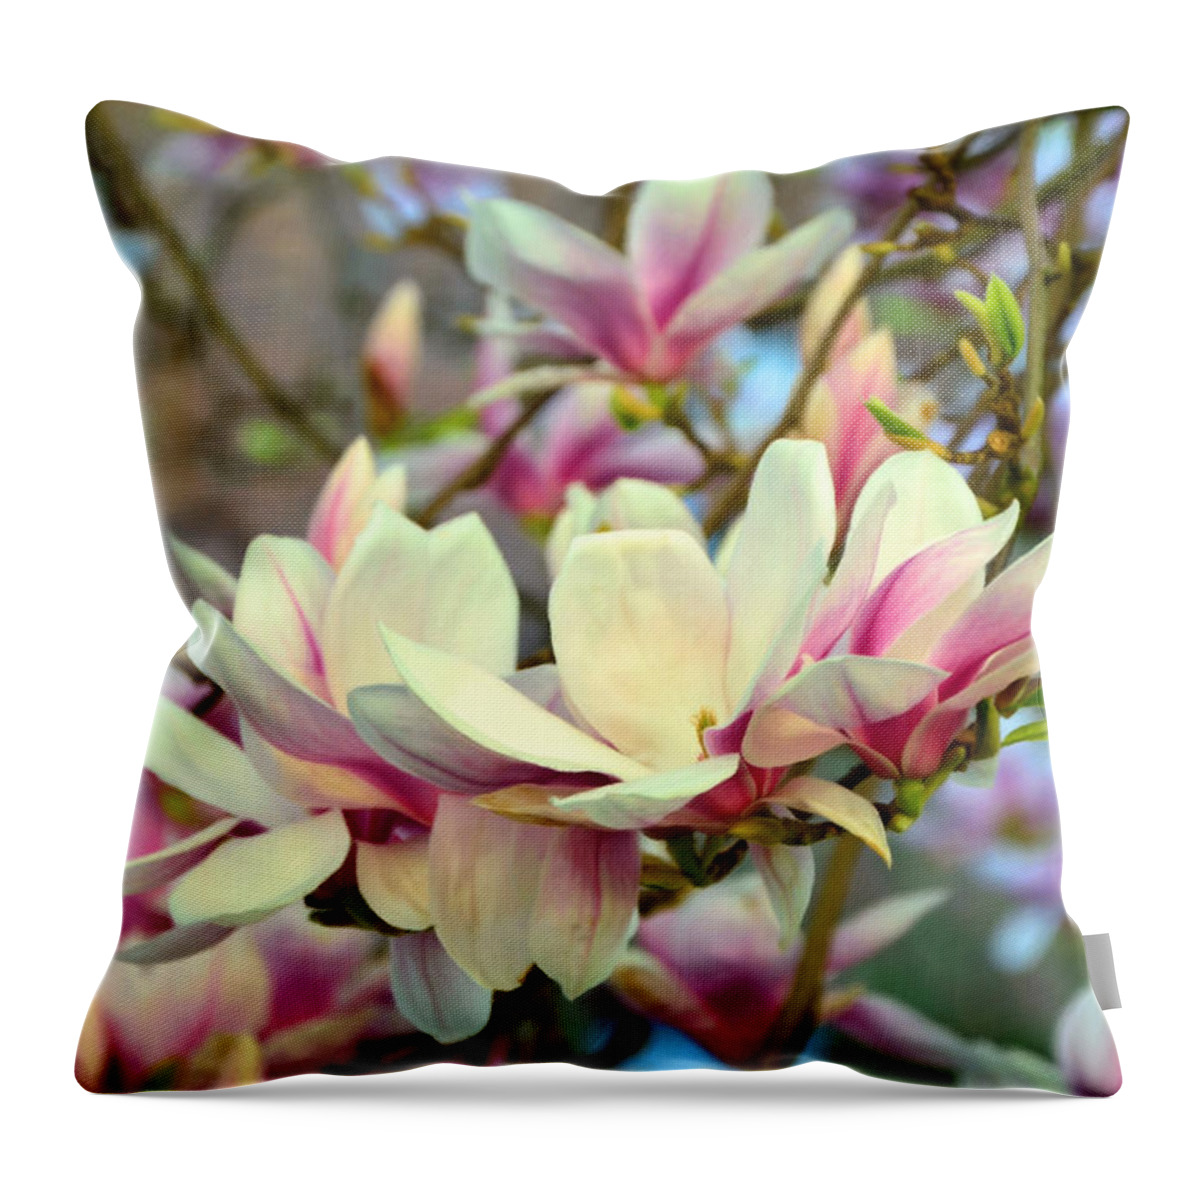 Magnolia Spring Throw Pillow featuring the photograph Magnolia Spring by Georgiana Romanovna